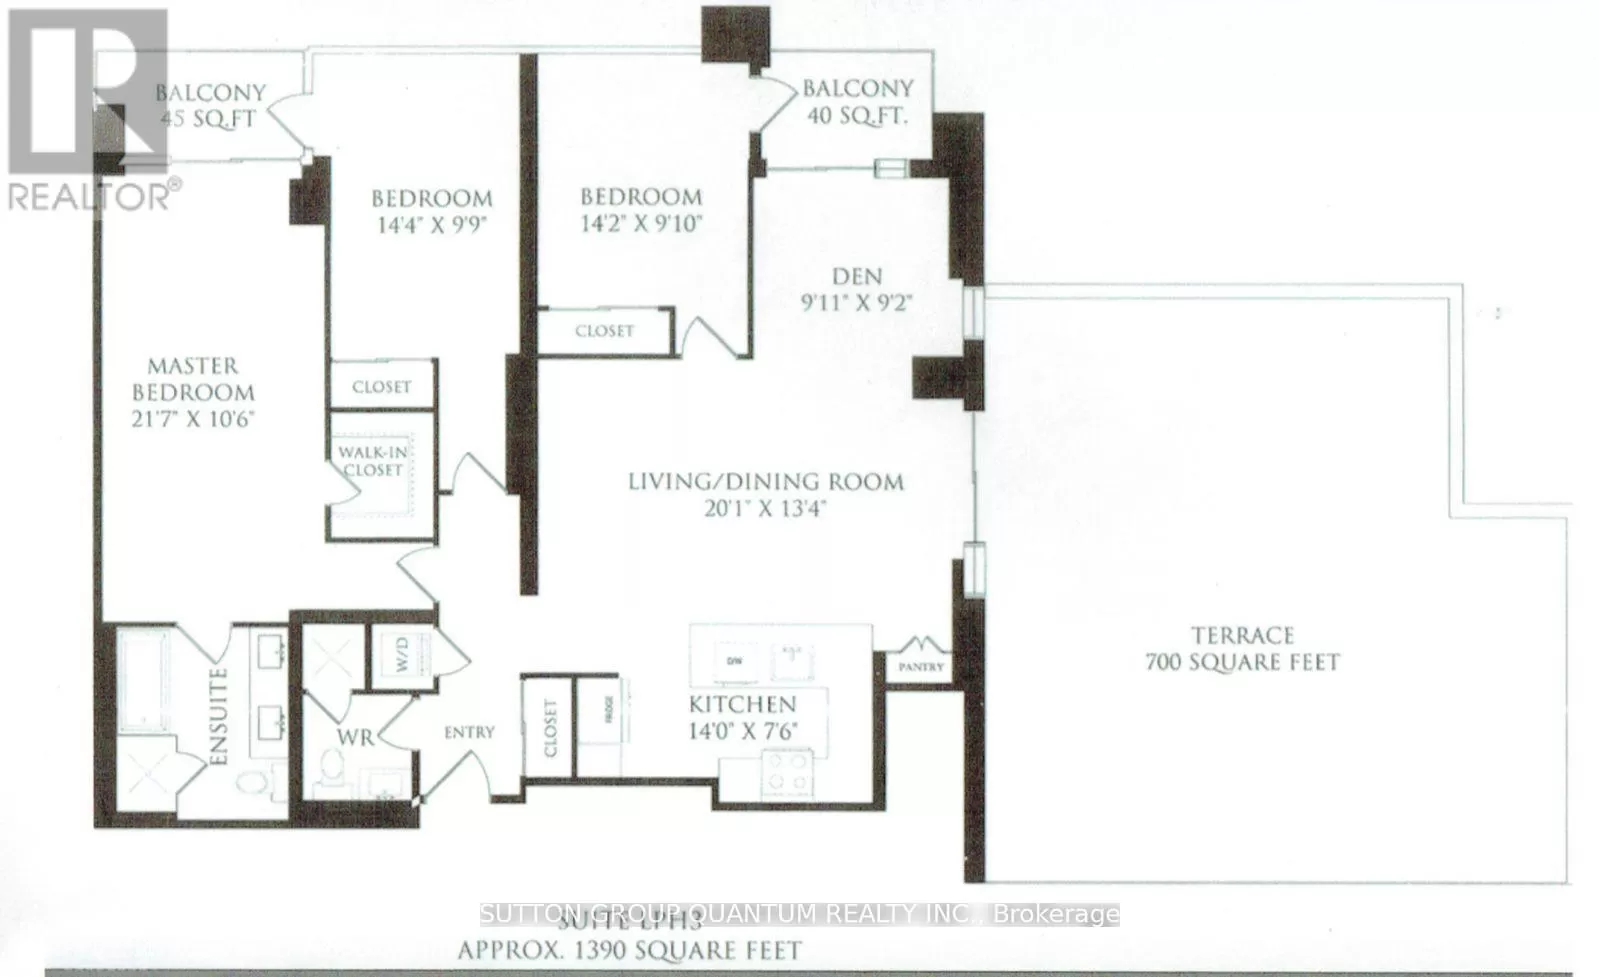 Apartment for rent: Lph3 - 400 Adelaide Street E, Toronto, Ontario M5A 4S3